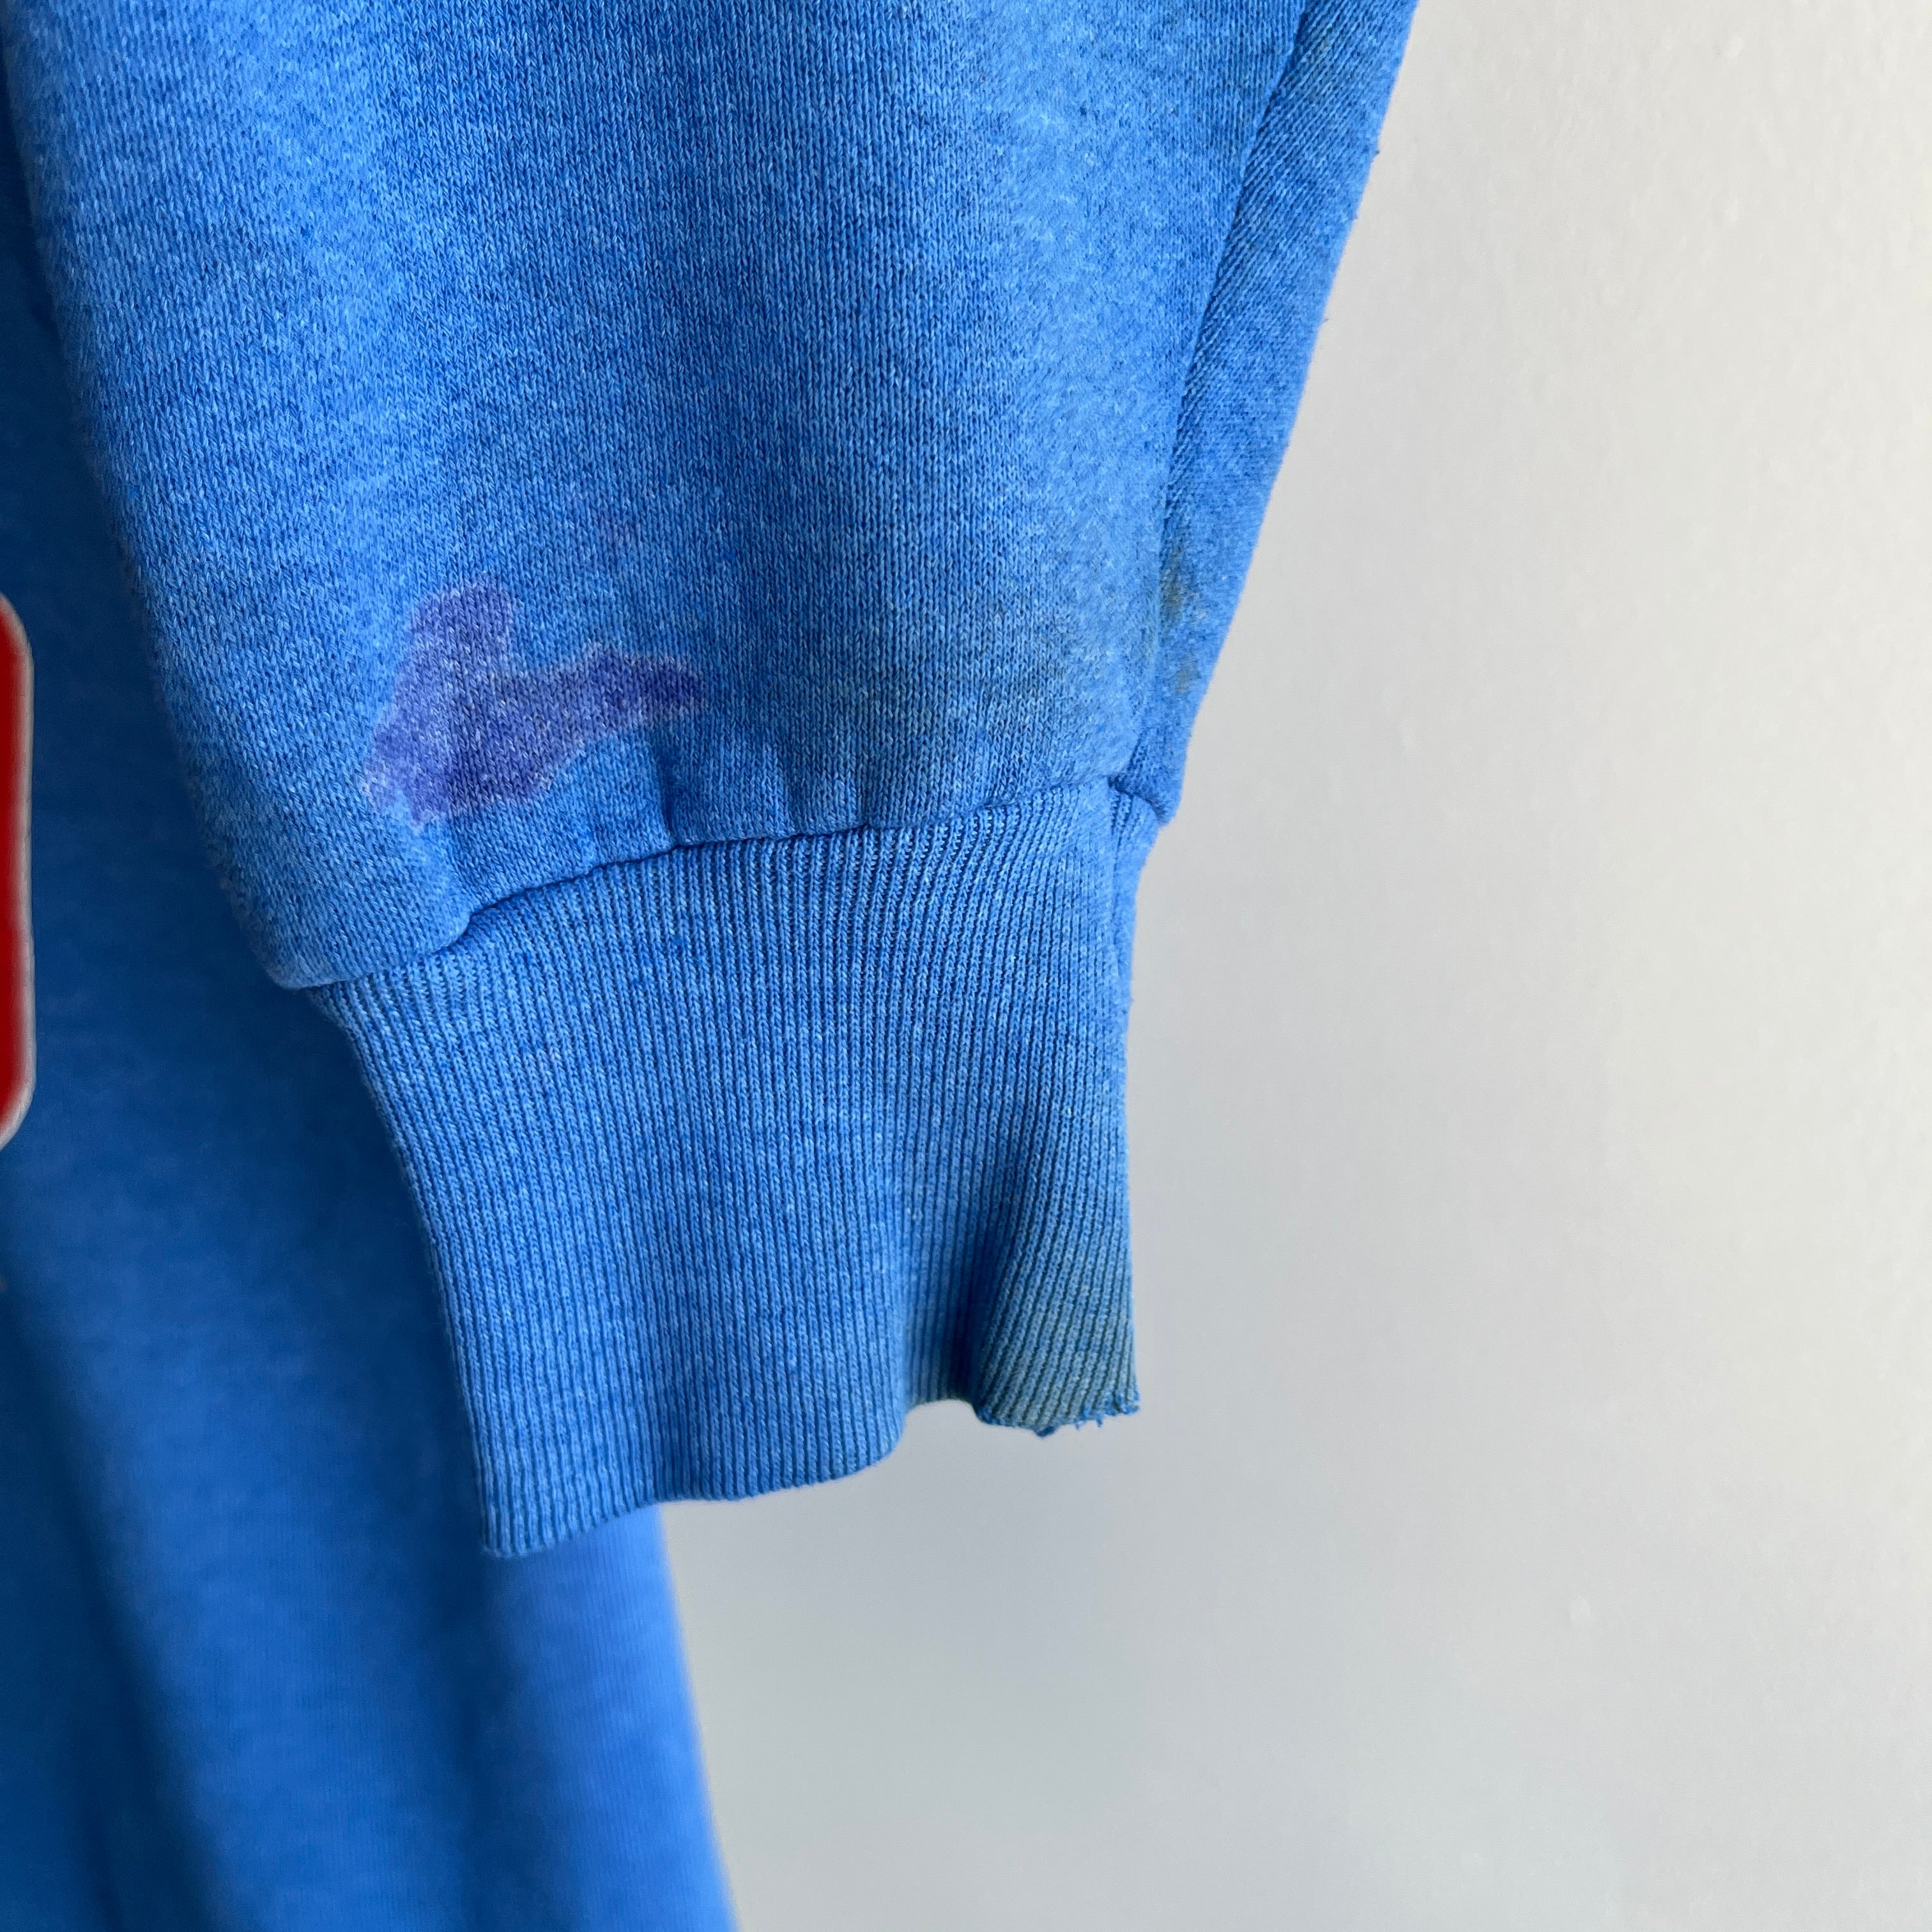 1992 Chicago Cubs Sweatshirt on an FOTL - WOW